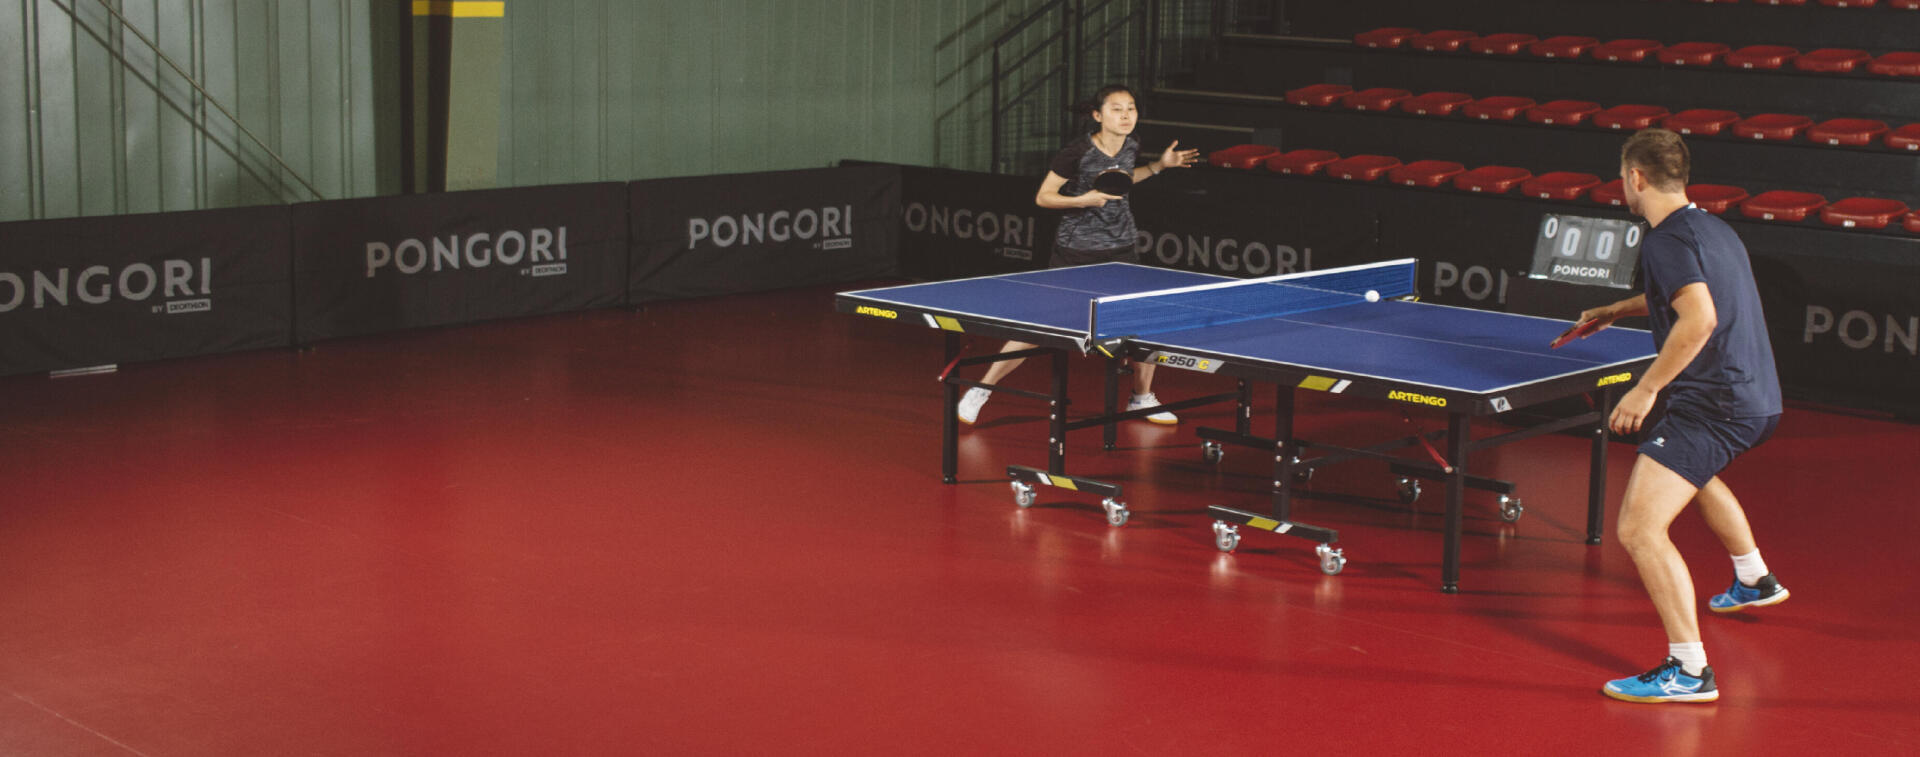 mesa de ping pong free ping pong académico aula partida jogo